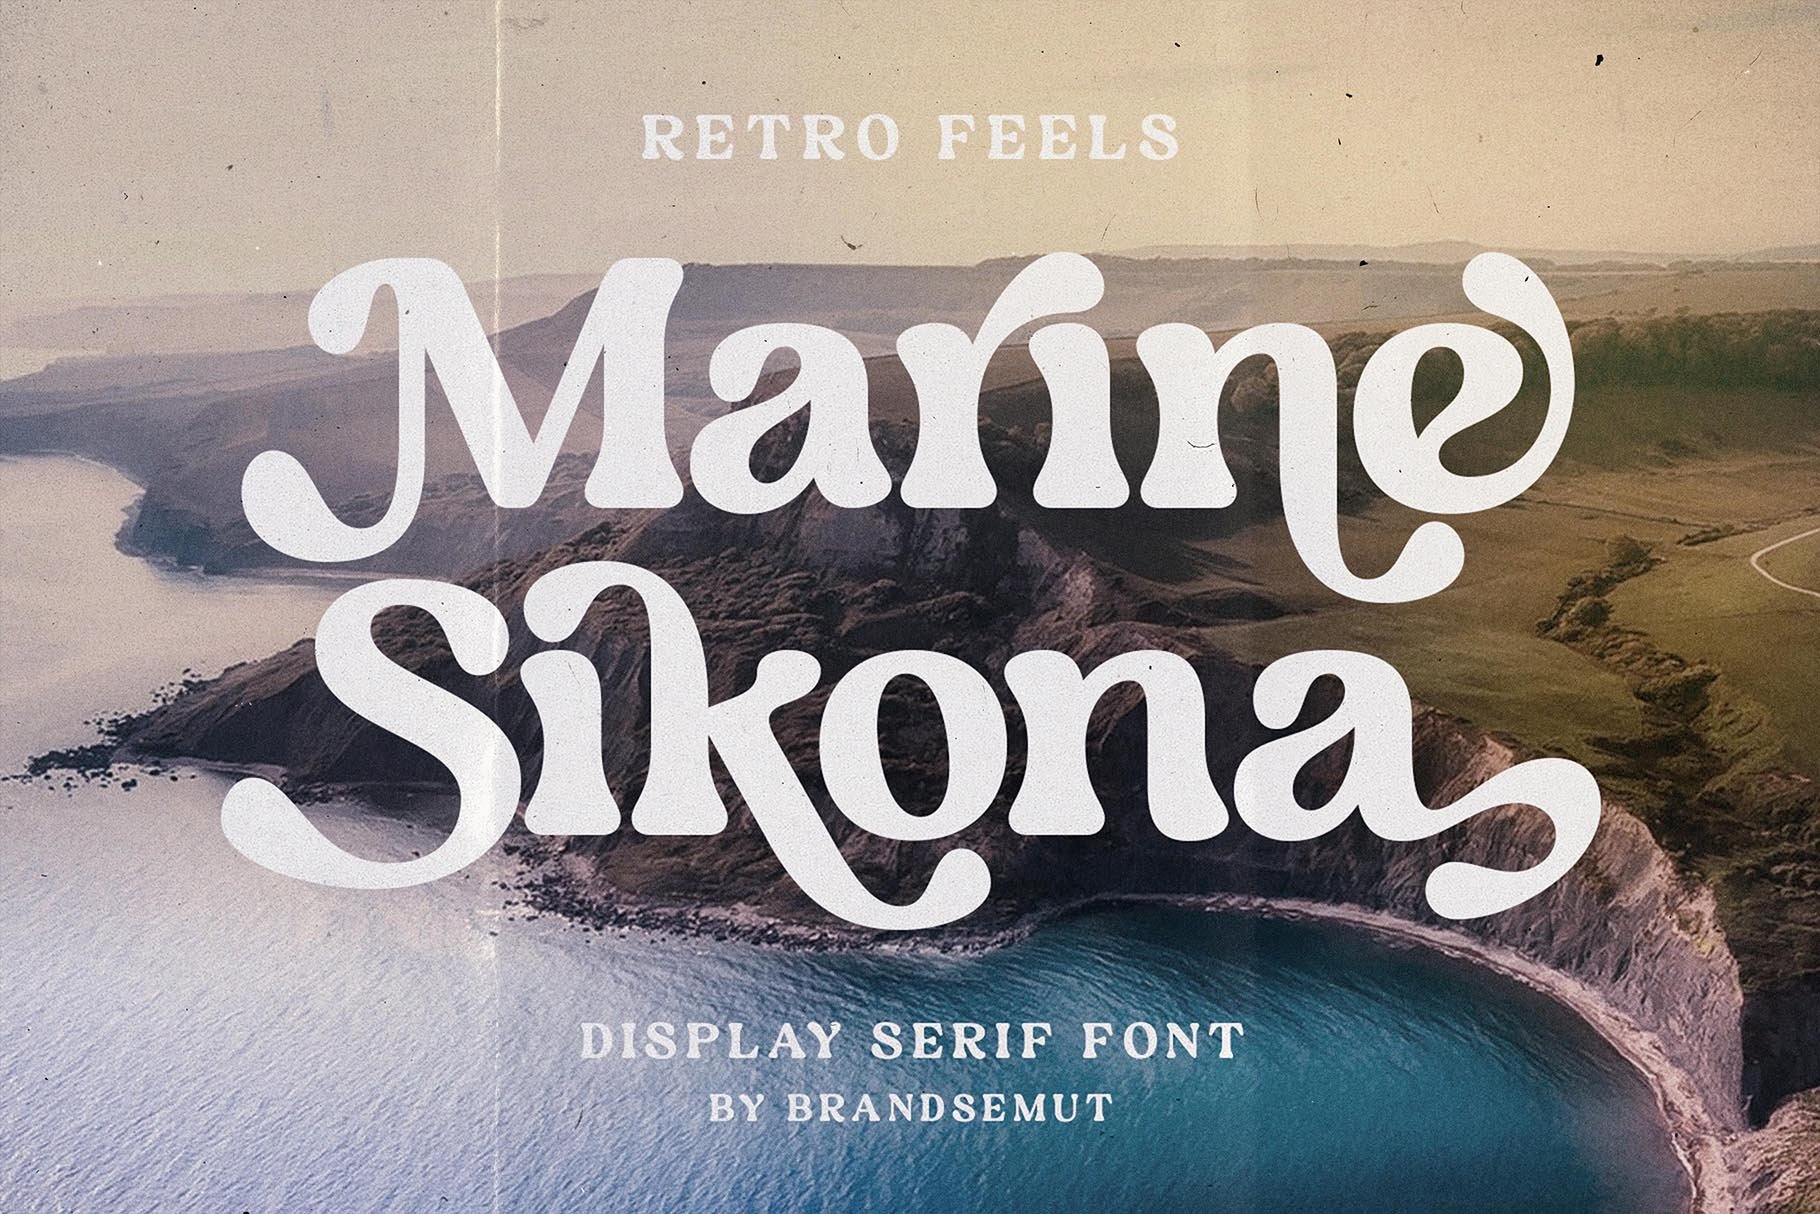 Marine Sikona – Modern Retro Serif cover image.